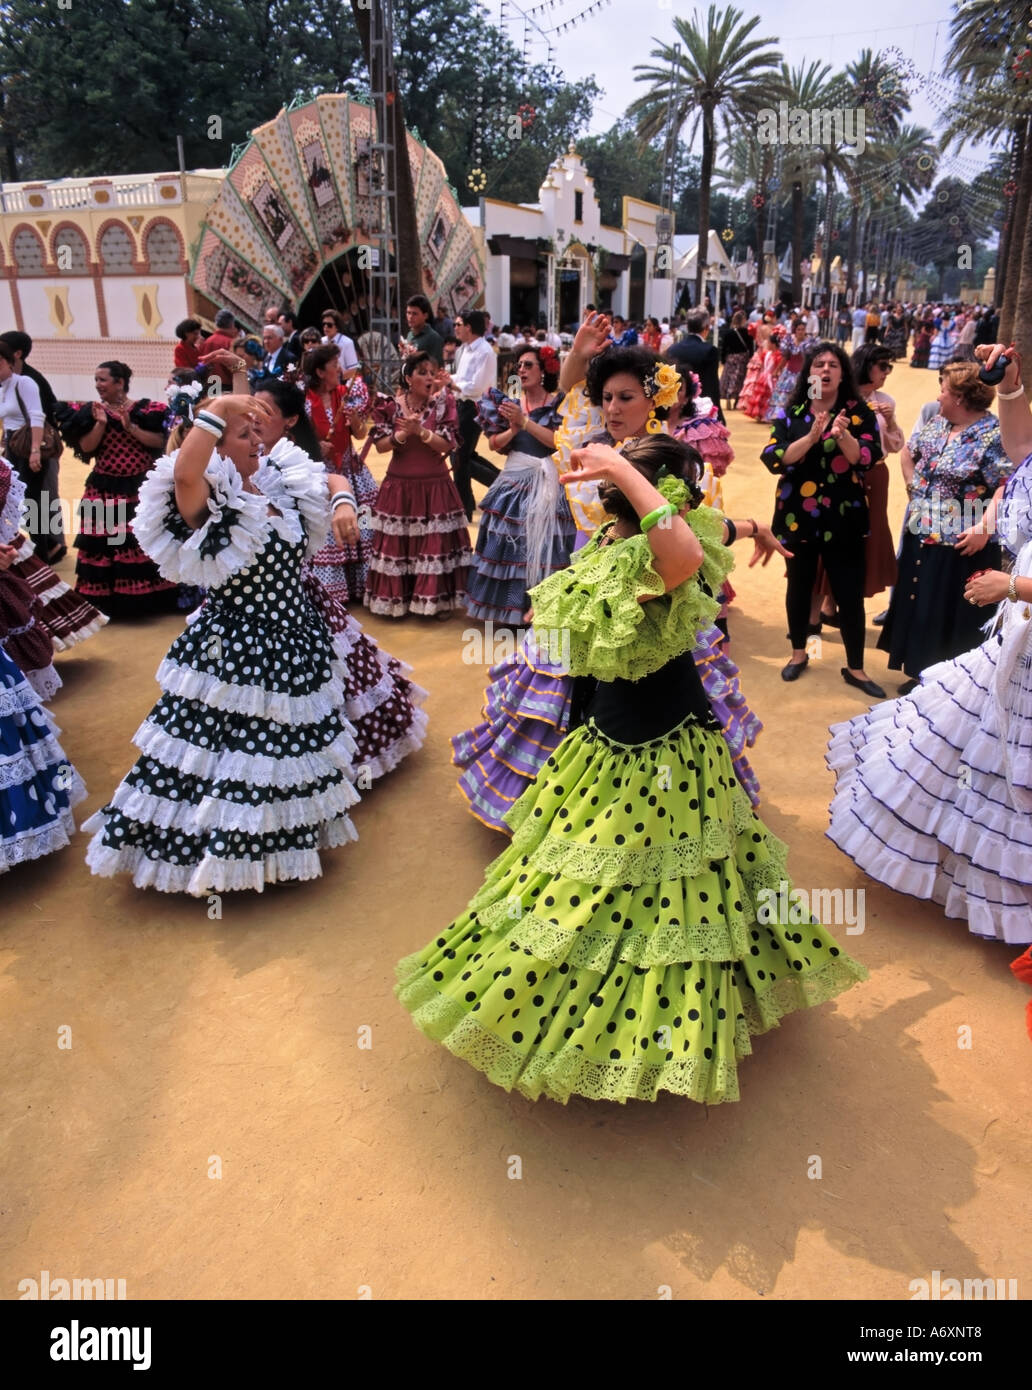 Jerez Horse Fair, Feria del Caballo, ladies flamenco dancing dressed in trajes de gitanas (gypsy dresses), Jerez de la Frontera, Andalusia, Spain Stock Photo